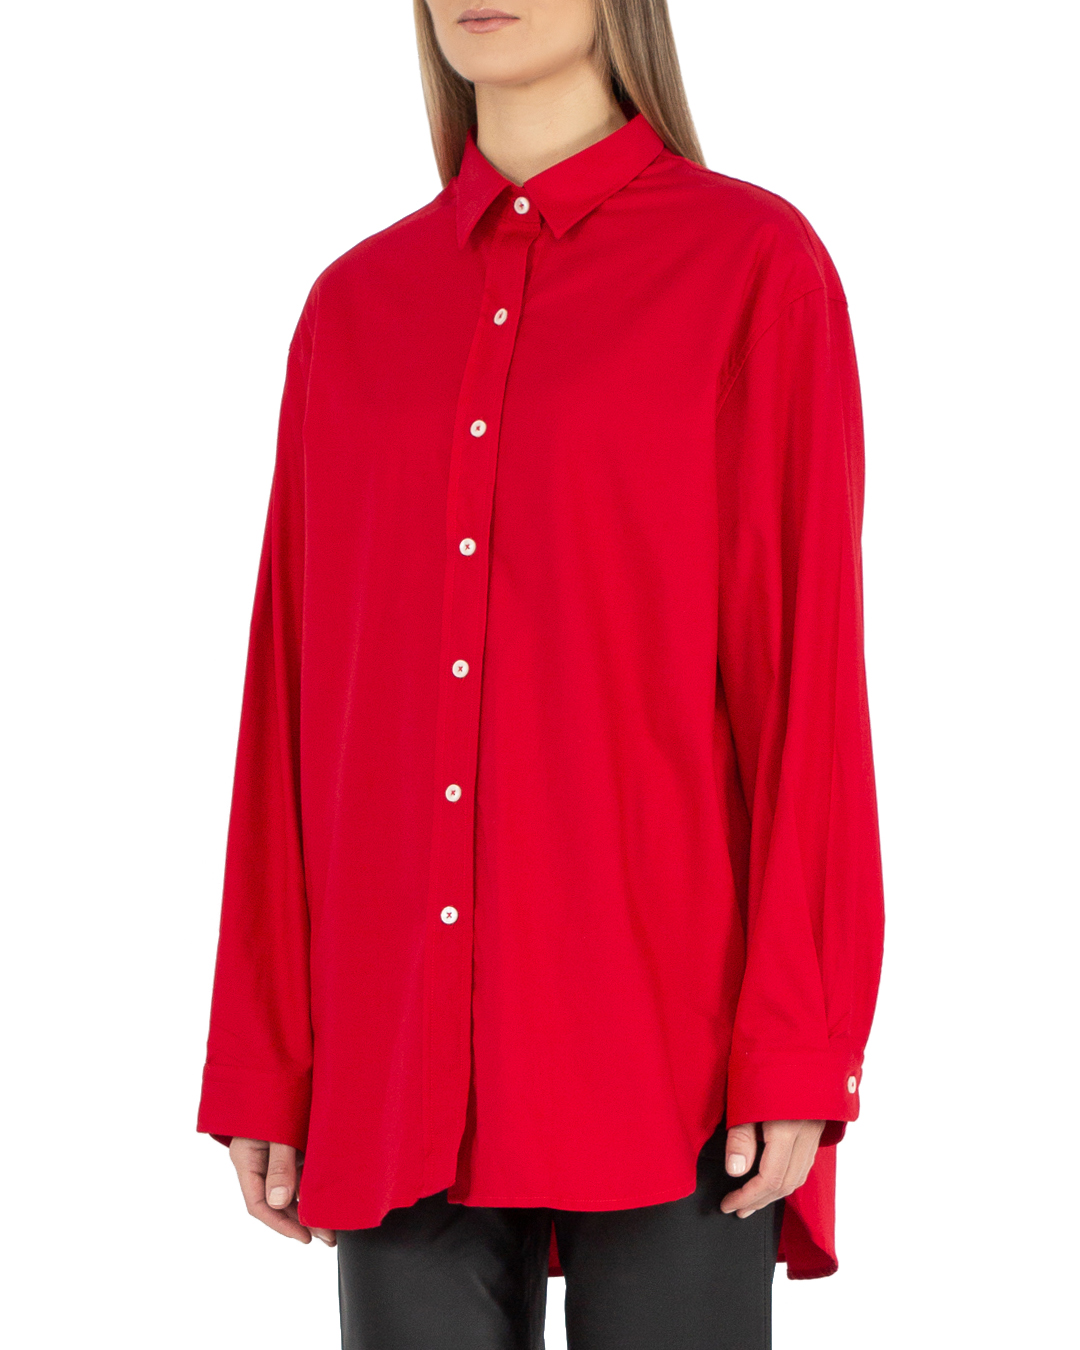 хлопковая рубашка ANTELOPE THE LABEL A1.RED.23/24 красный UNI, размер UNI A1.RED.23/24 A1.RED.23/24 красный UNI - фото 3